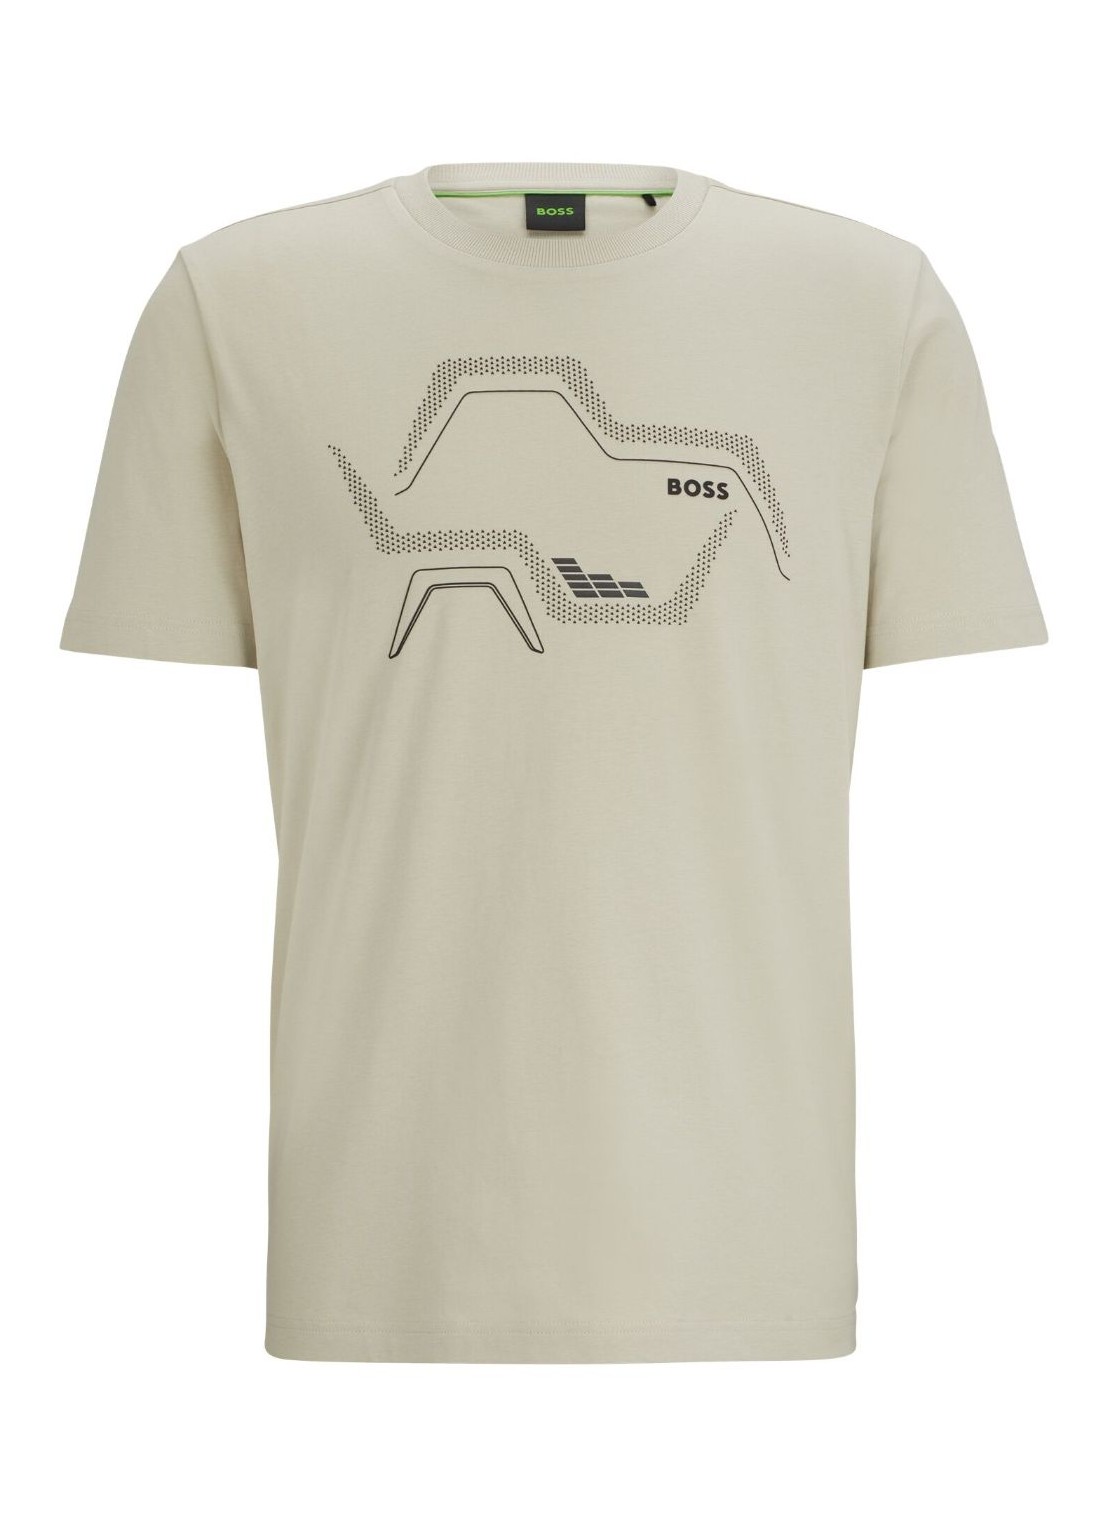 Camiseta boss t-shirt mantee 3 - 50506358 271 talla XXL
 